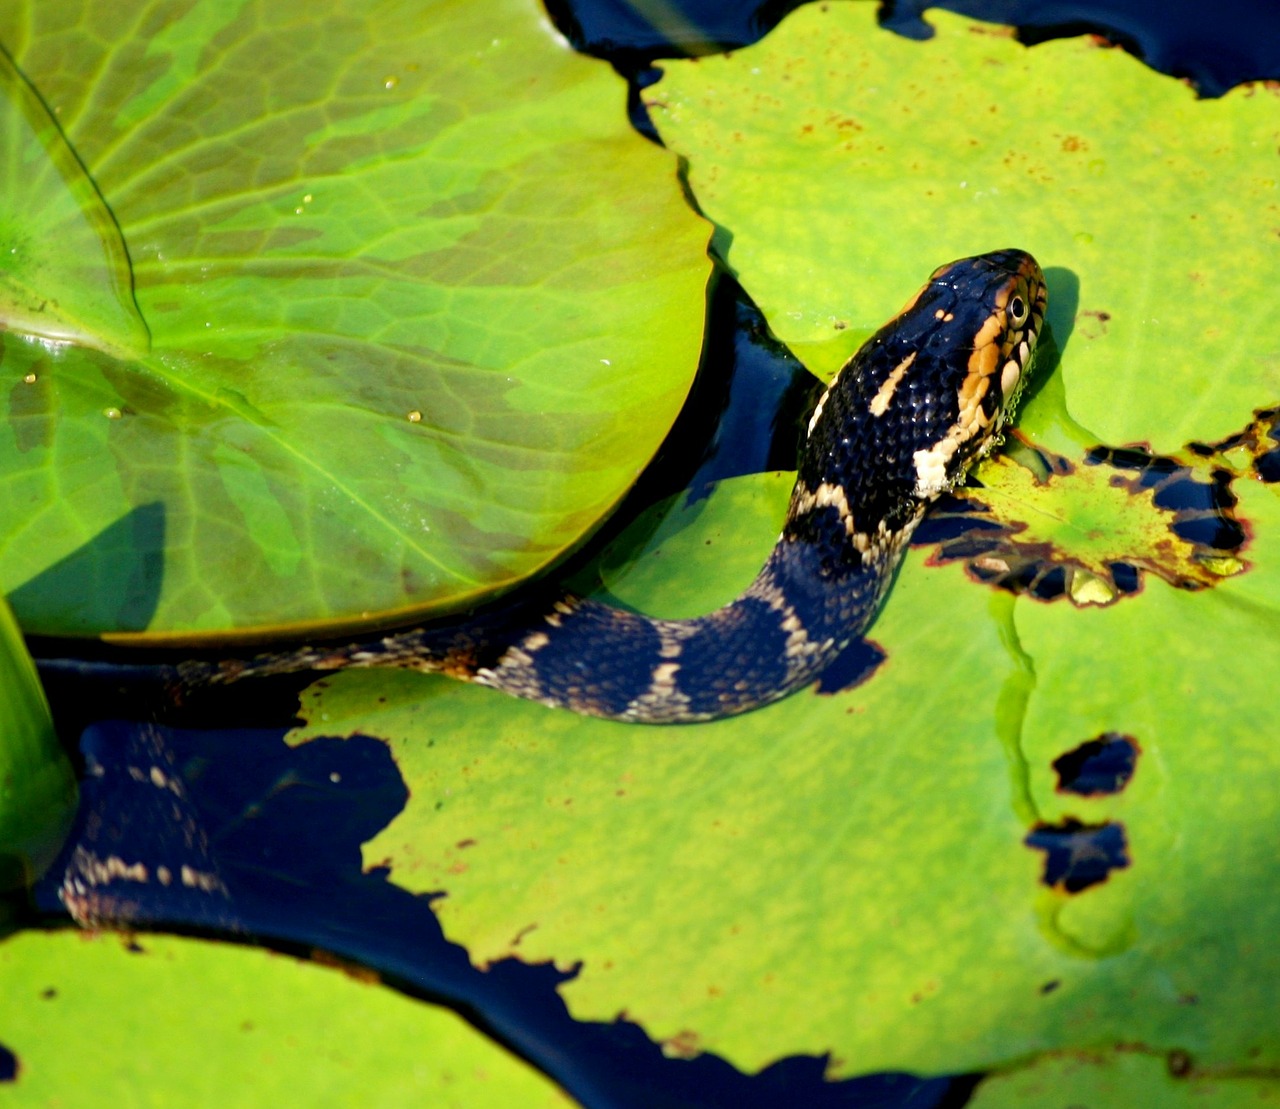 serpent predator pond free photo